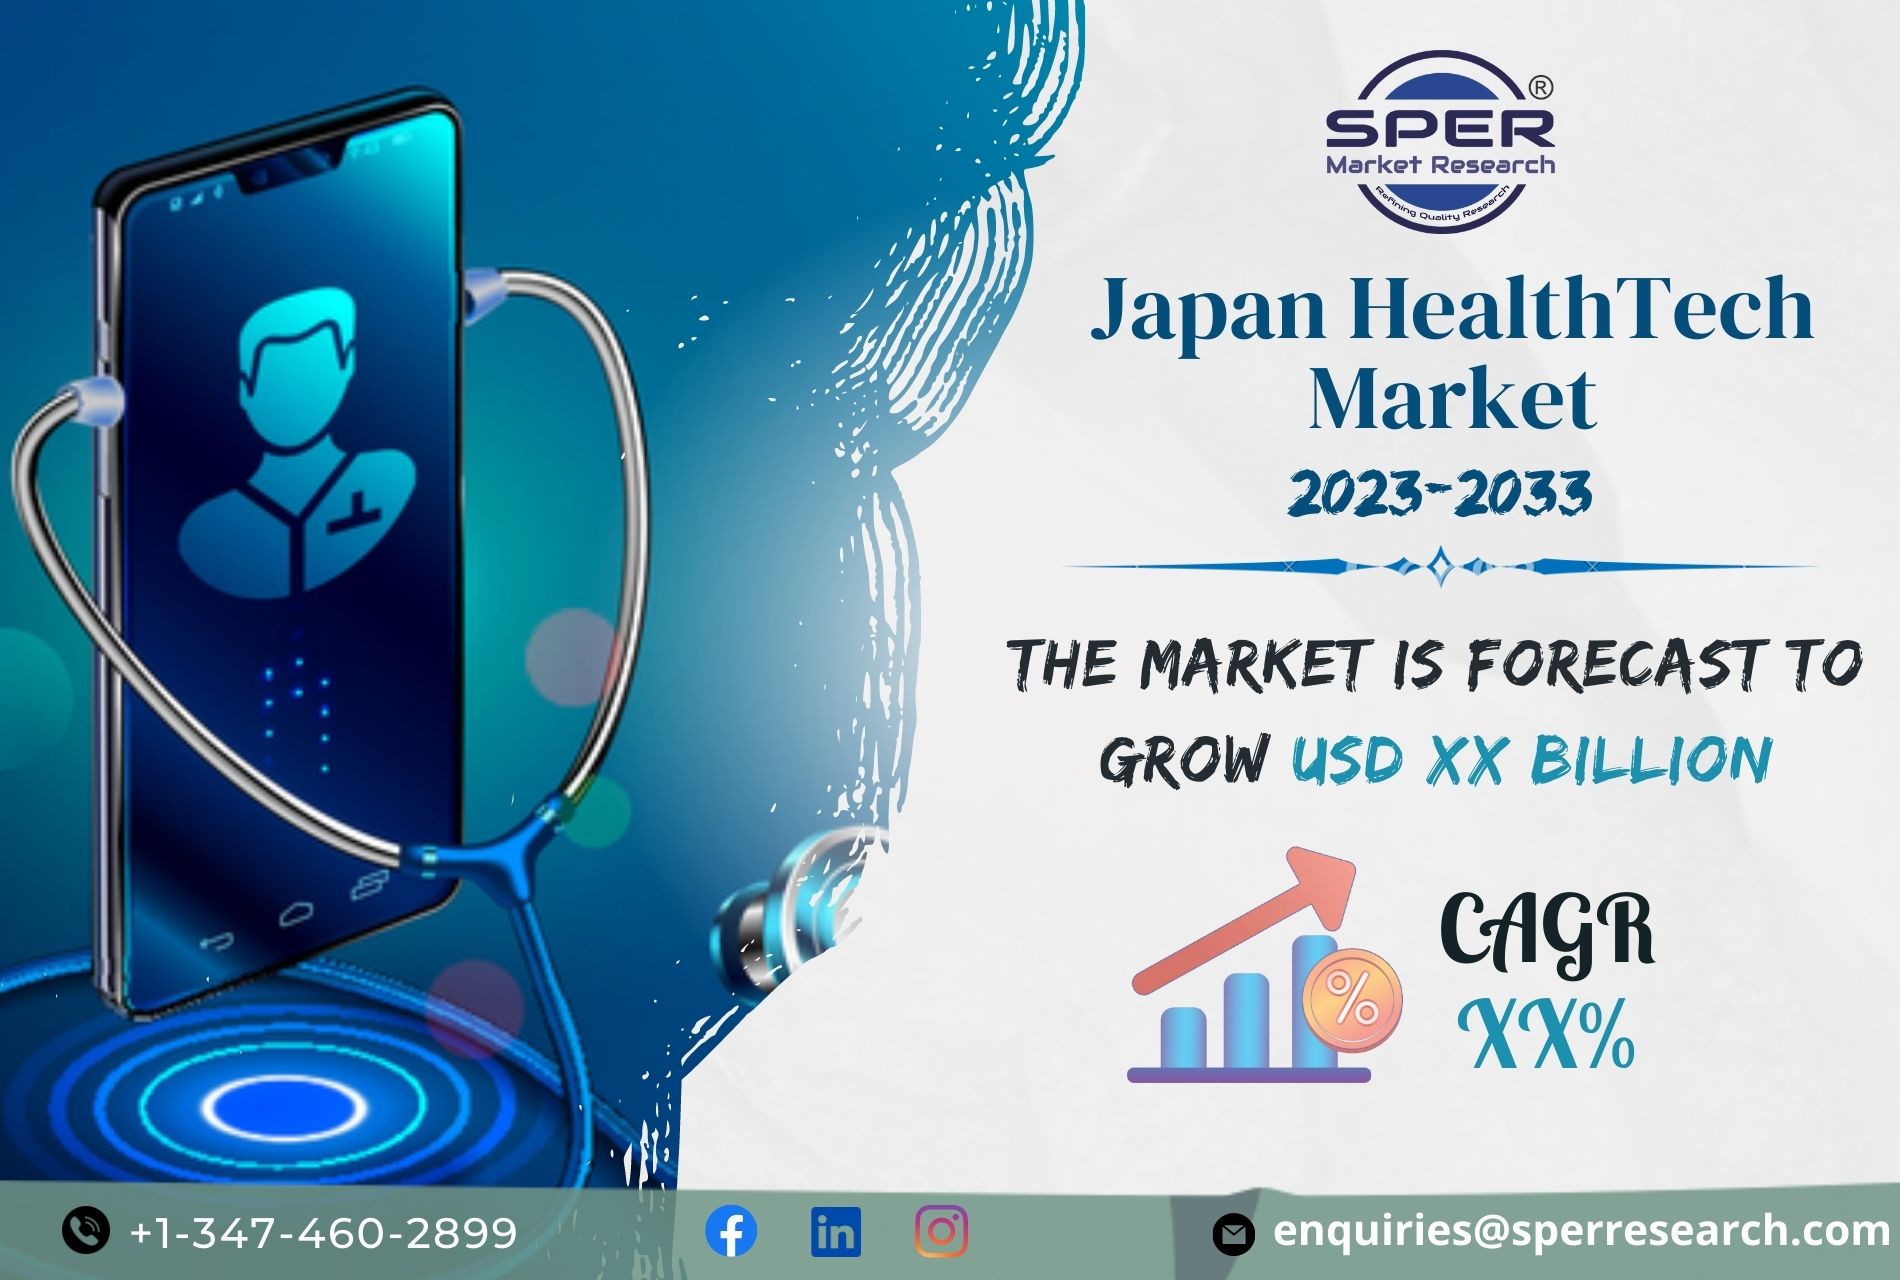 Japan HealthTech Market